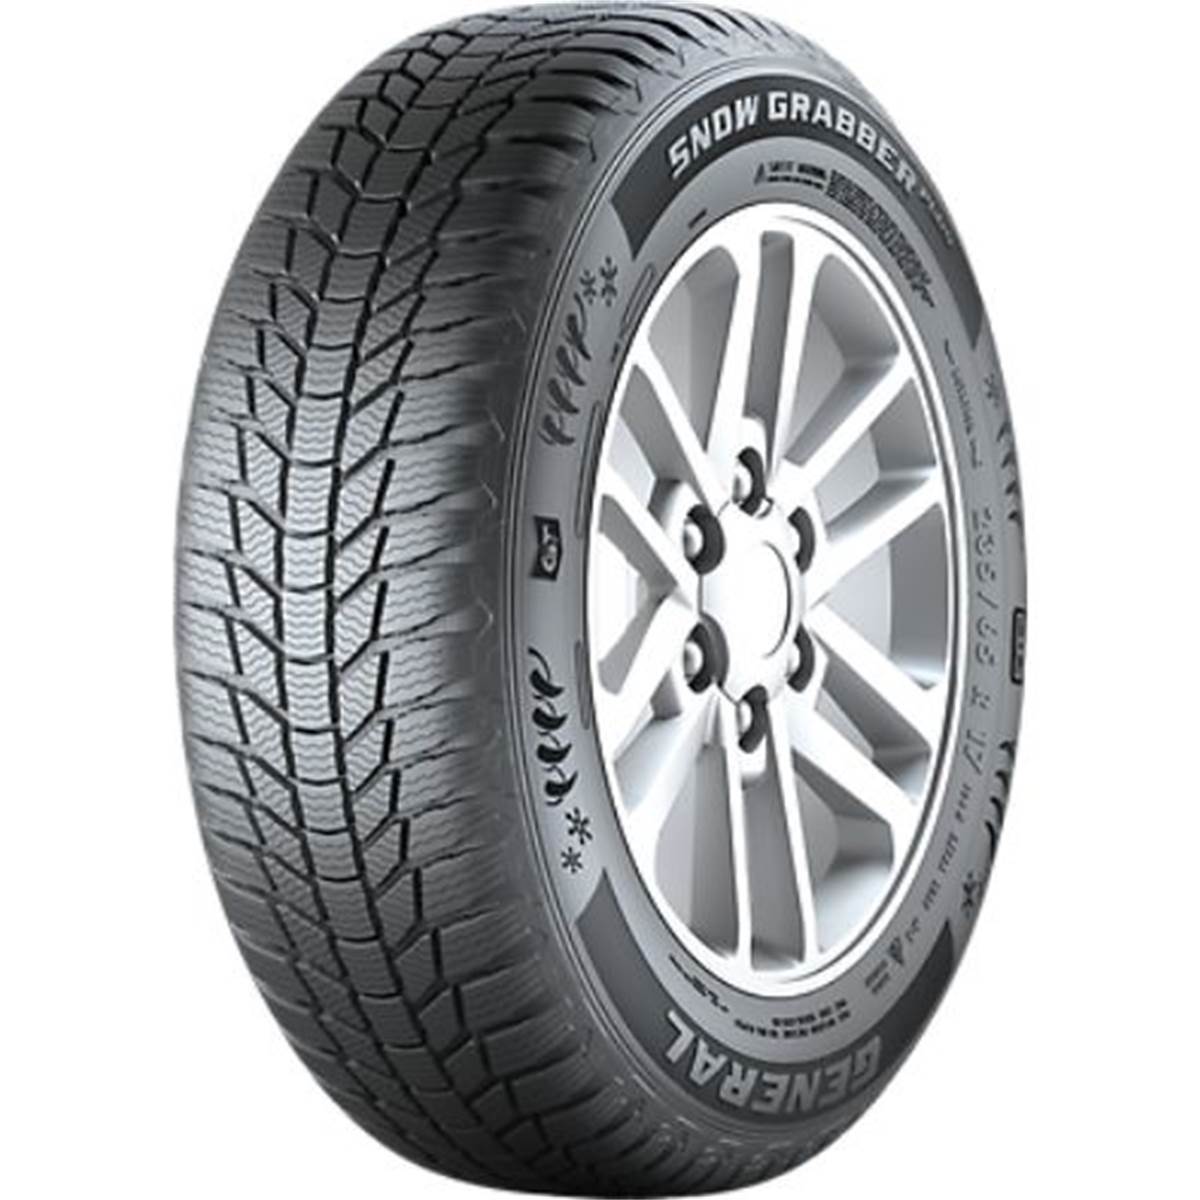 General Tire Neumático  Snow Grabber Plus 215/70R16 100H